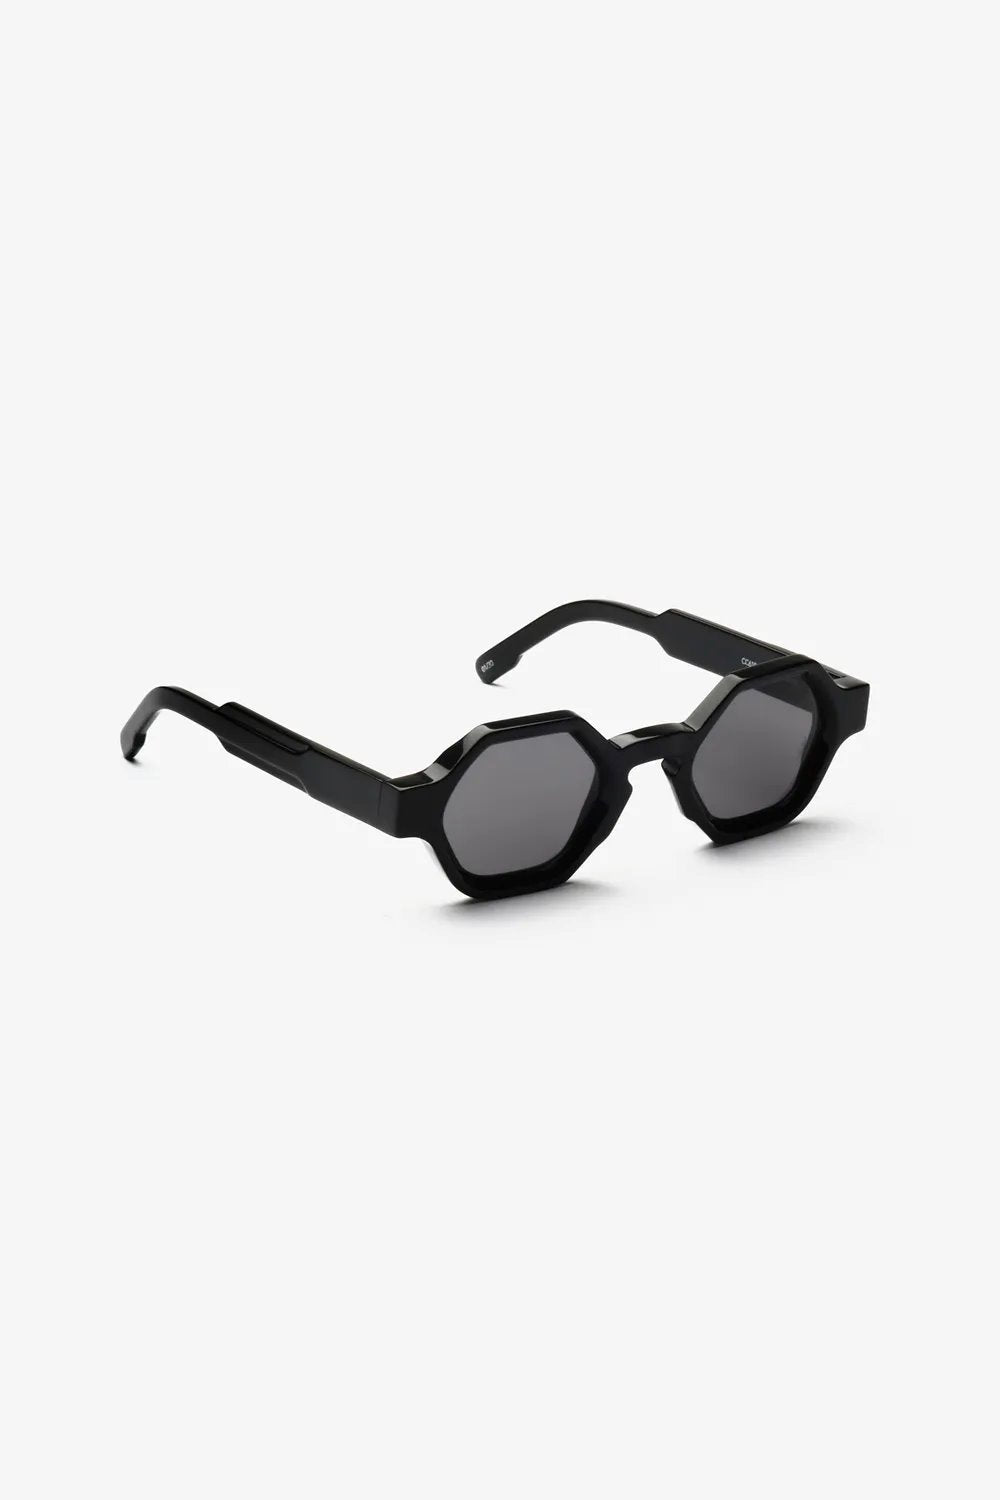 Capote - CC610 Sunglasses Capote Open Grey 066 ONES 